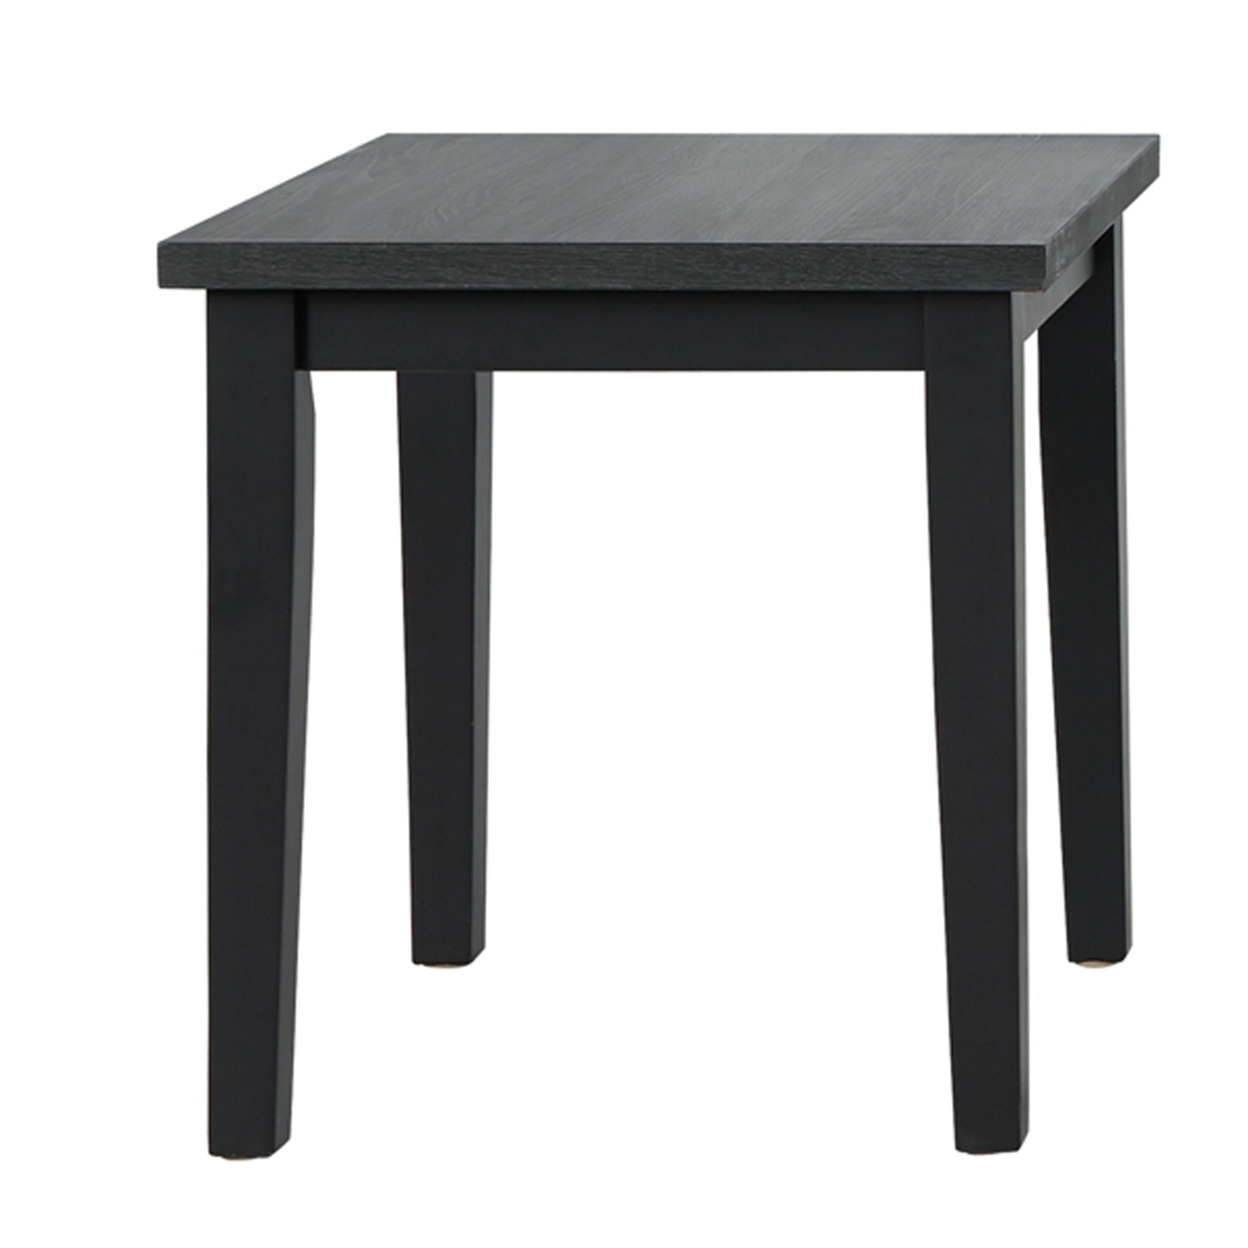 Modern 3 Piece Coffee Table Set, Melamine Laminate Finish, Dark Gray Wood- Saltoro Sherpi